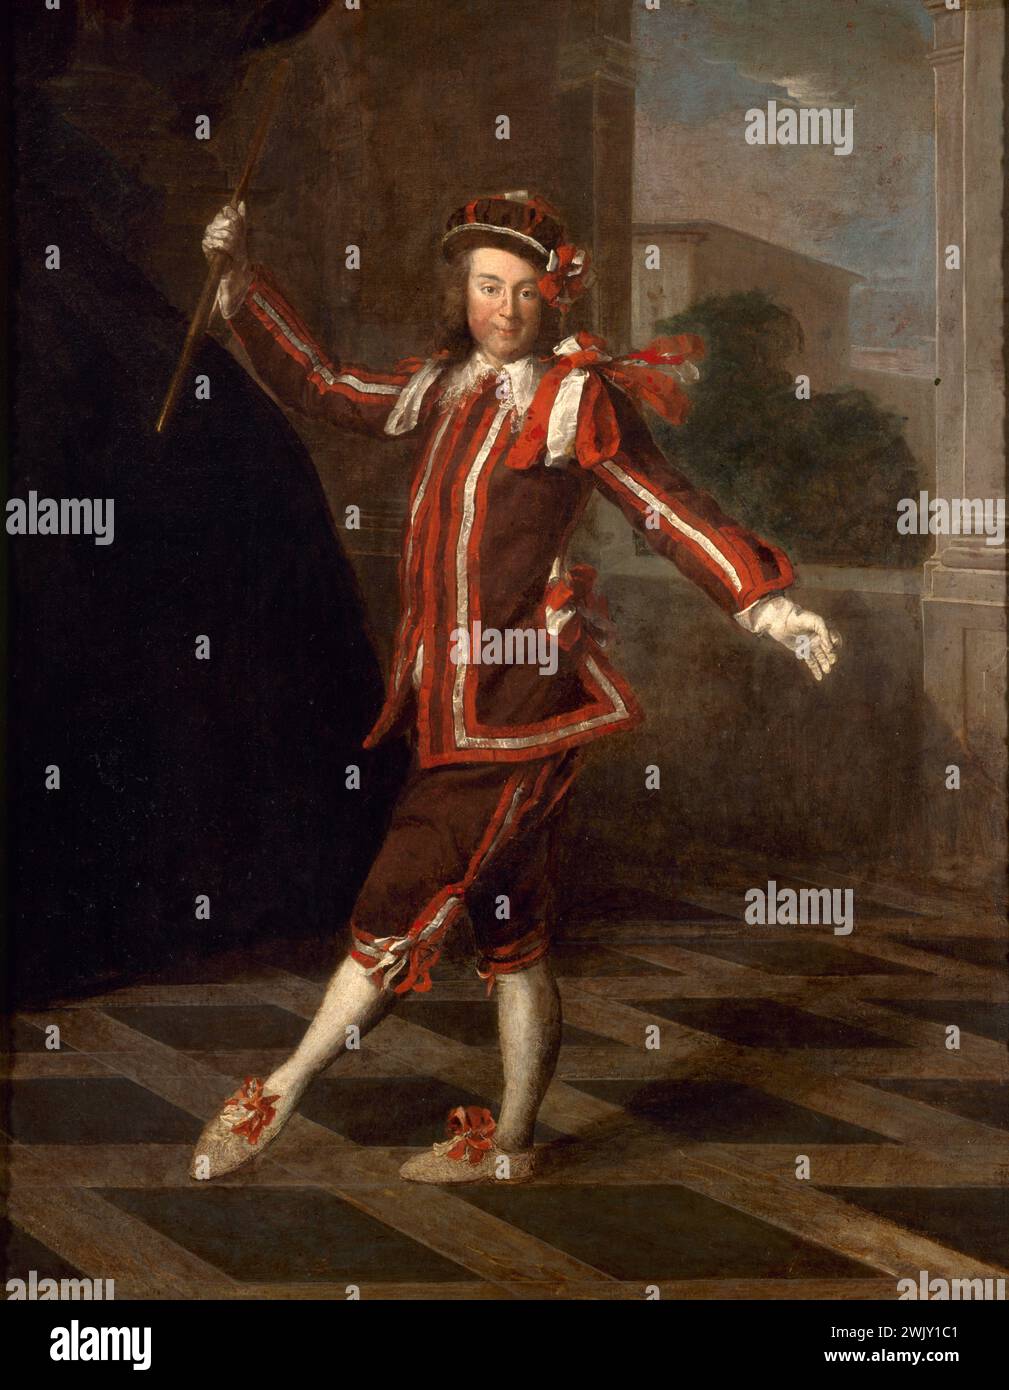 Mezzetin dancing, around 1720 '. Anonymous painting. Oil on canvas. Paris, Carnavalet museum. Italian Comedy, Costume, Dance, Dancer, French School, Mezzetin, Comedie character Stock Photo